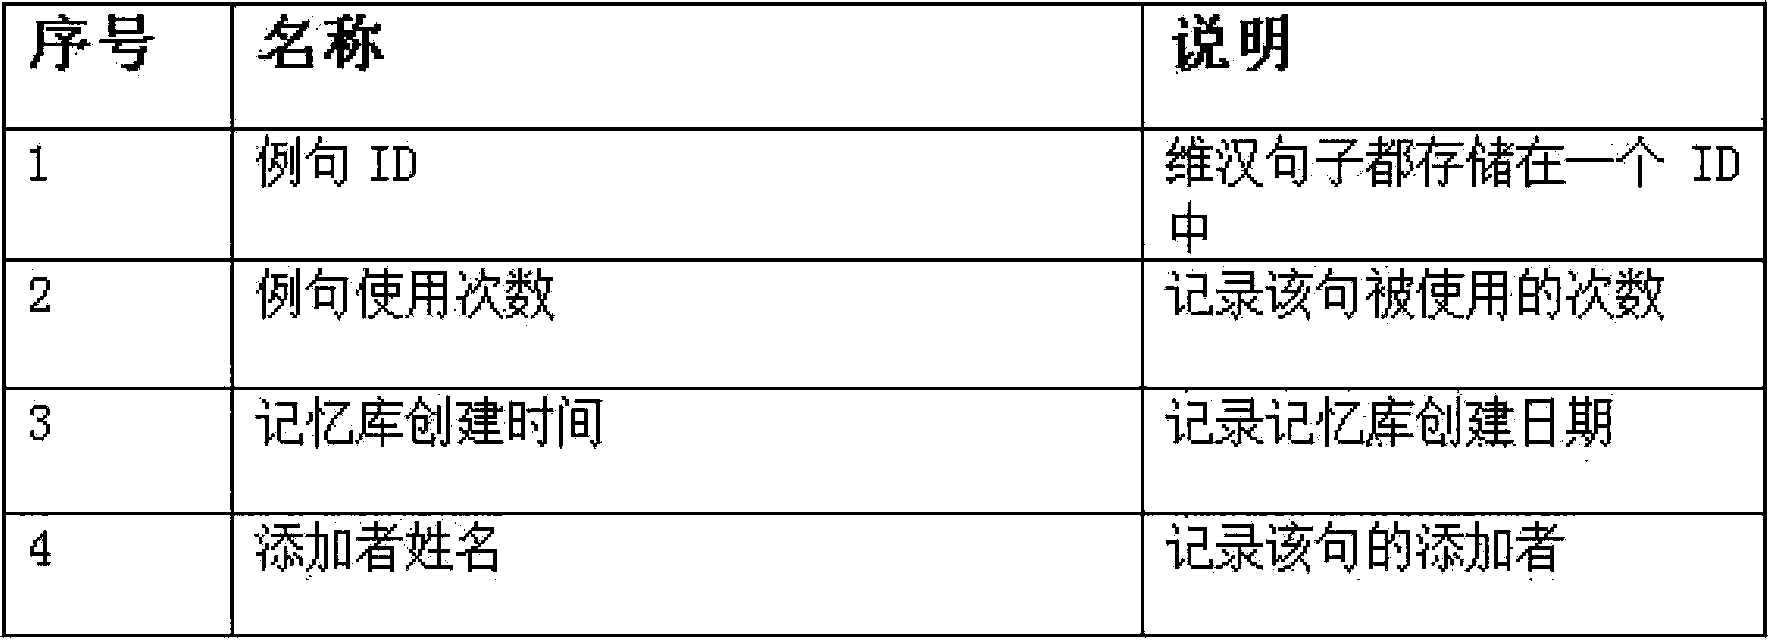 Uyghur-Chinese bi-directional translation memory system construction method